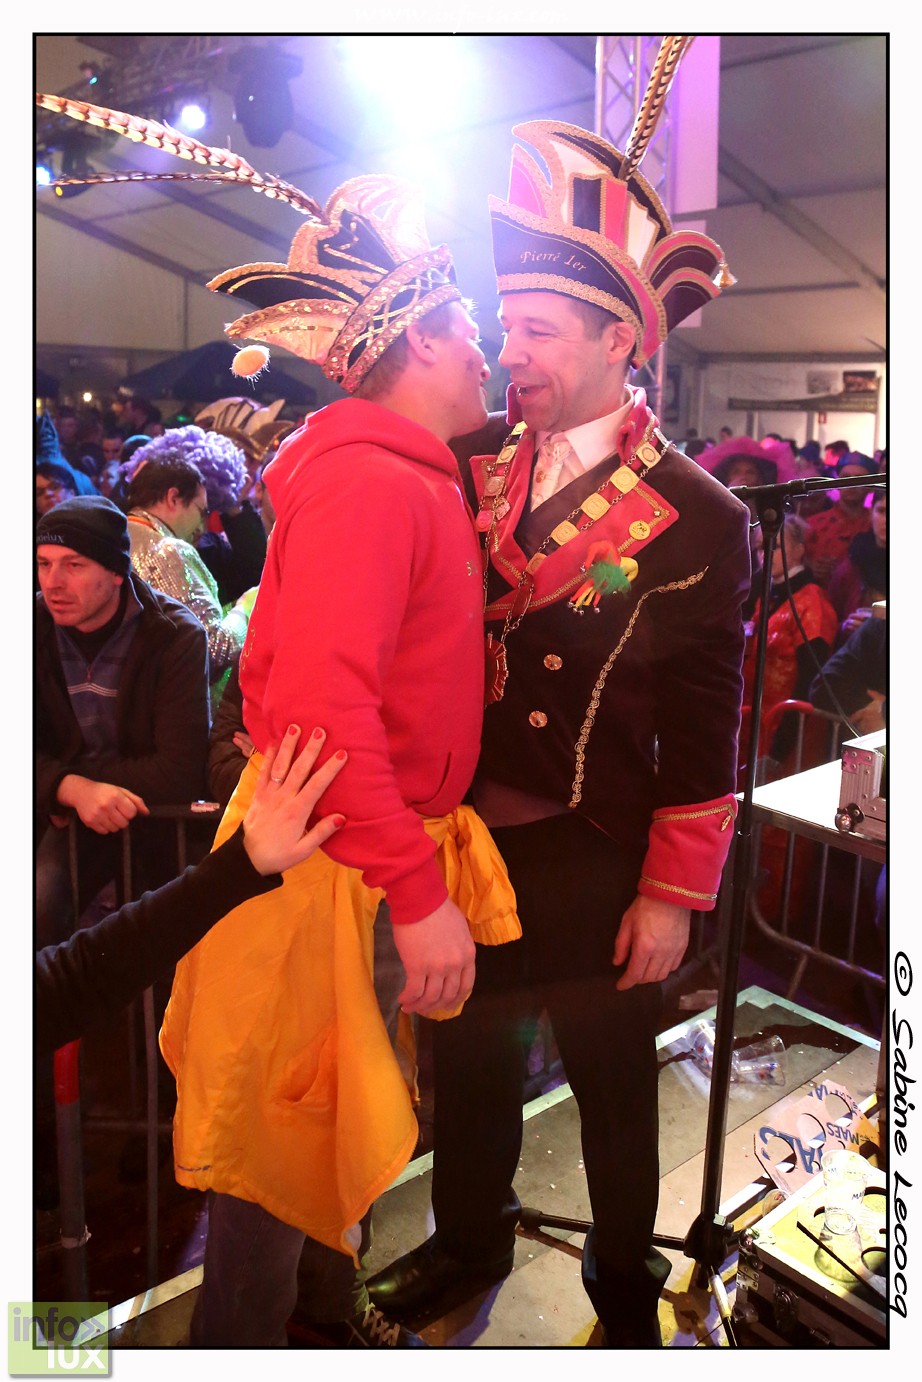 images/stories/PHOTOSREP/La-Roche-en-Ardenne/Carnaval2/Carnaval-larocheb351